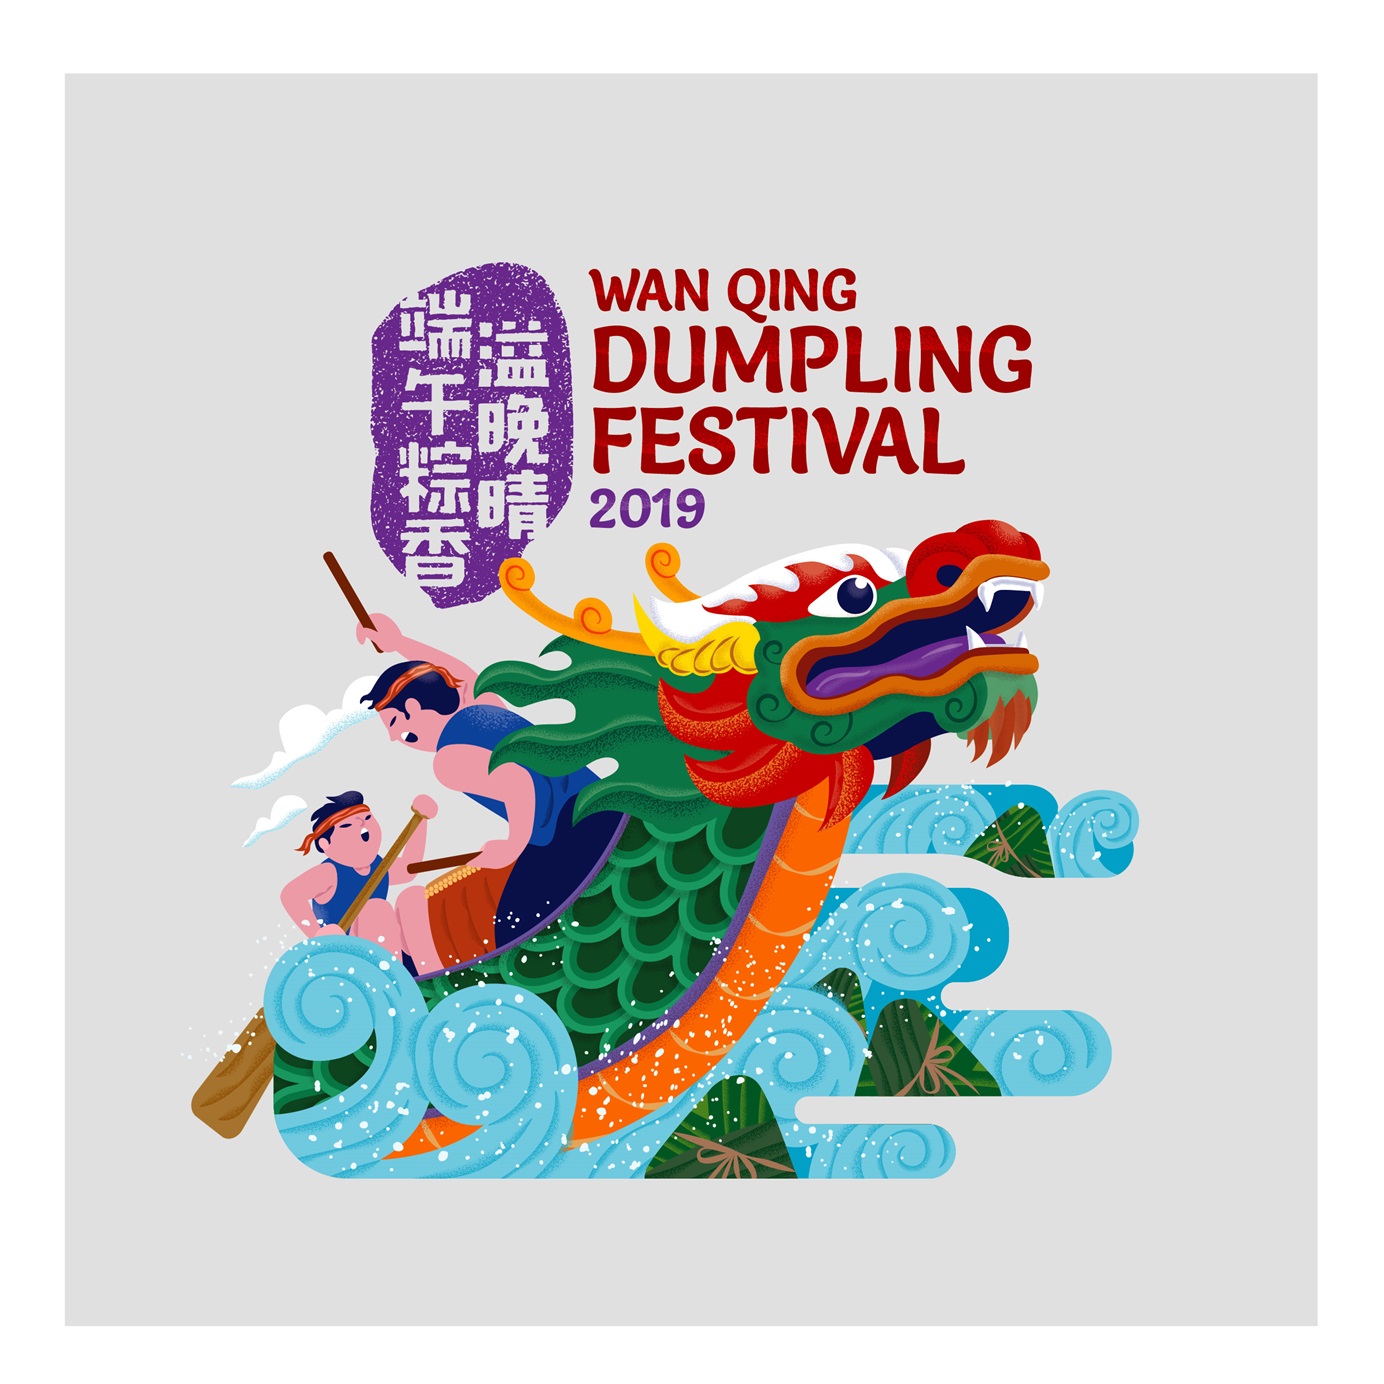 Wan Qing Dumpling Festival 2019